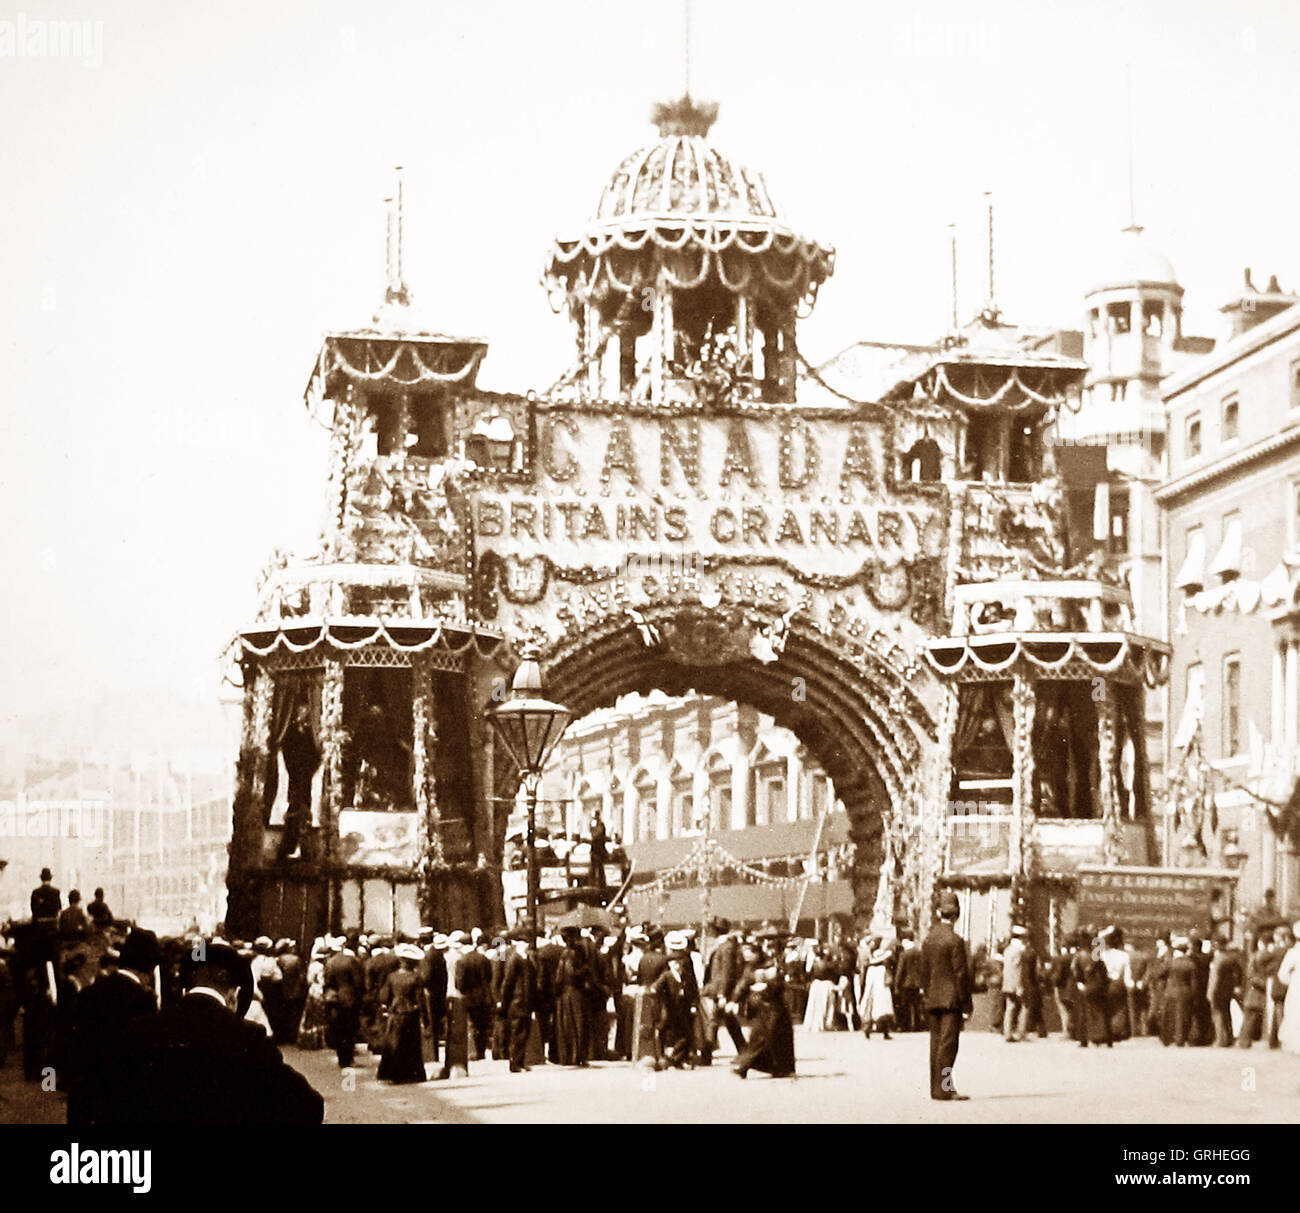 Canada's Coronation Arch, Whitehall, London - early 1900s Stock Photo